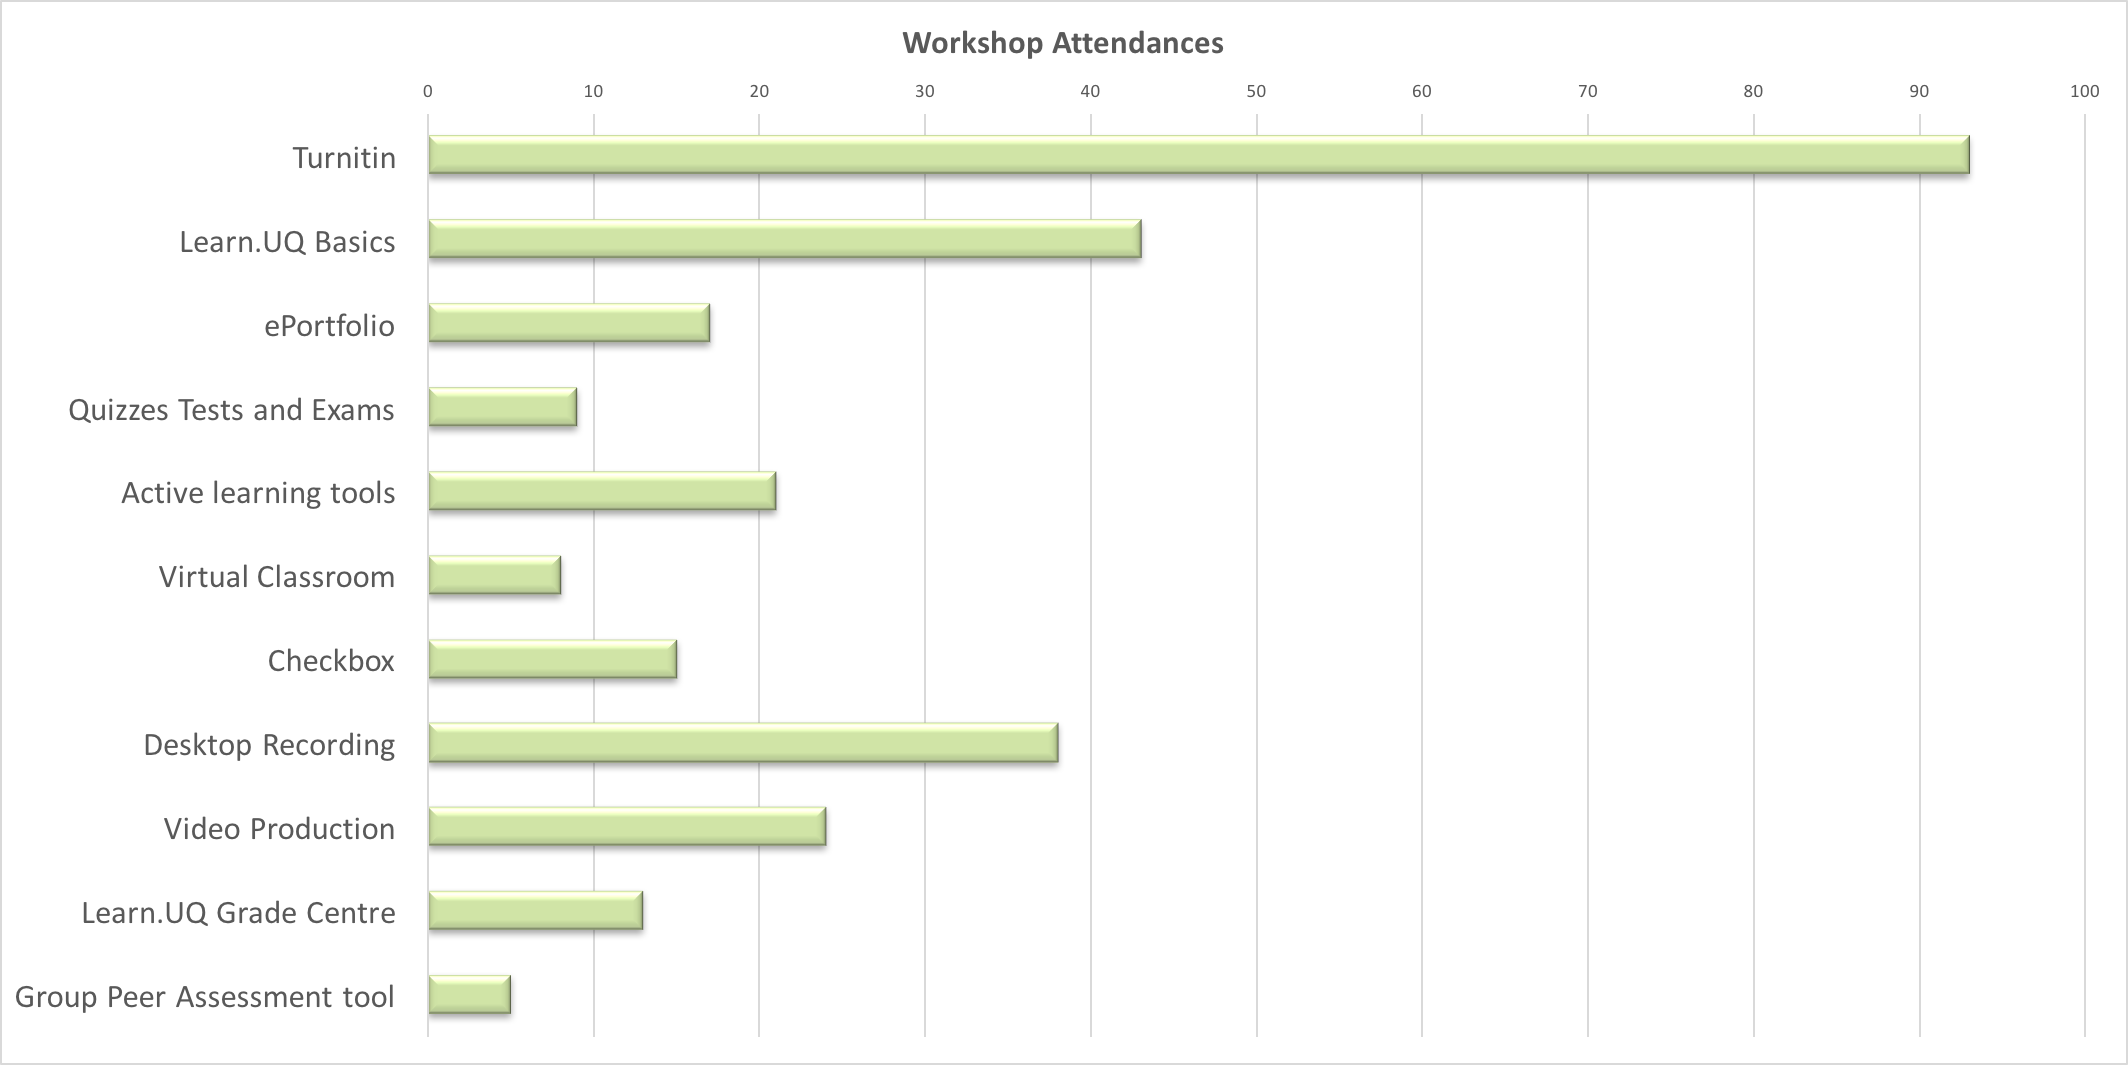 Workshop Attendances